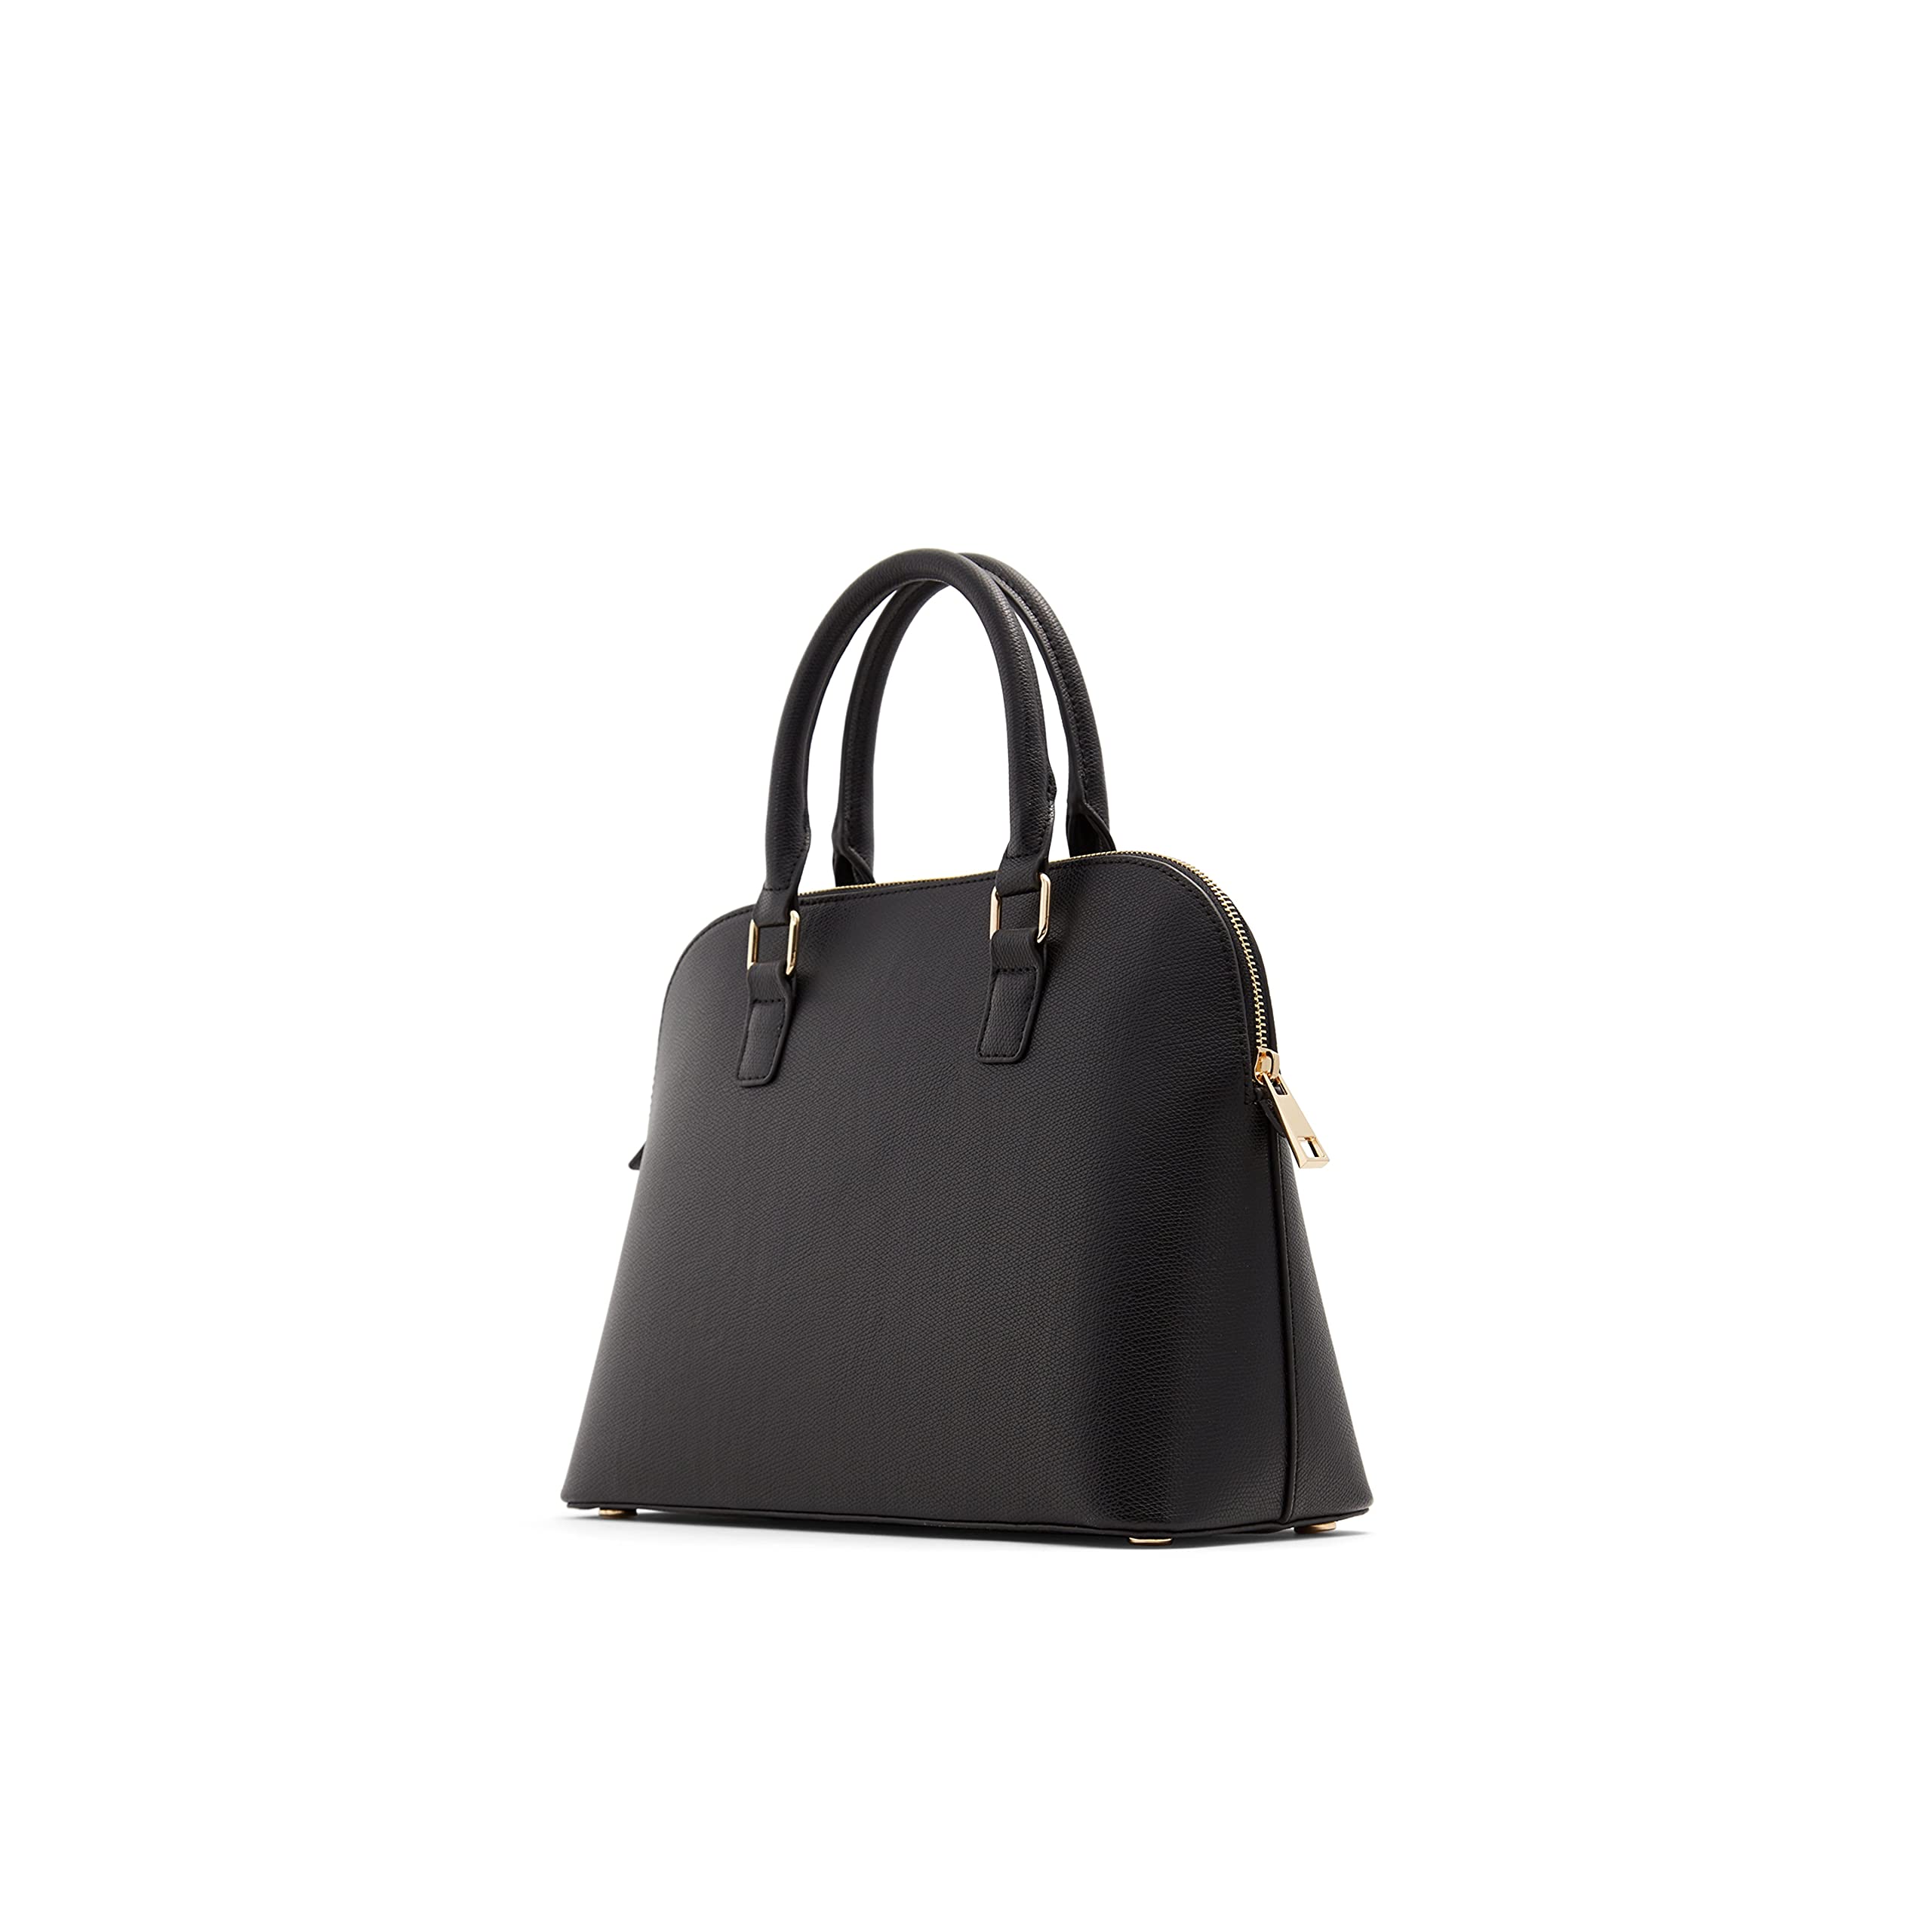 Aldo Blue White Striped Handbag for Women : Amazon.in: Fashion